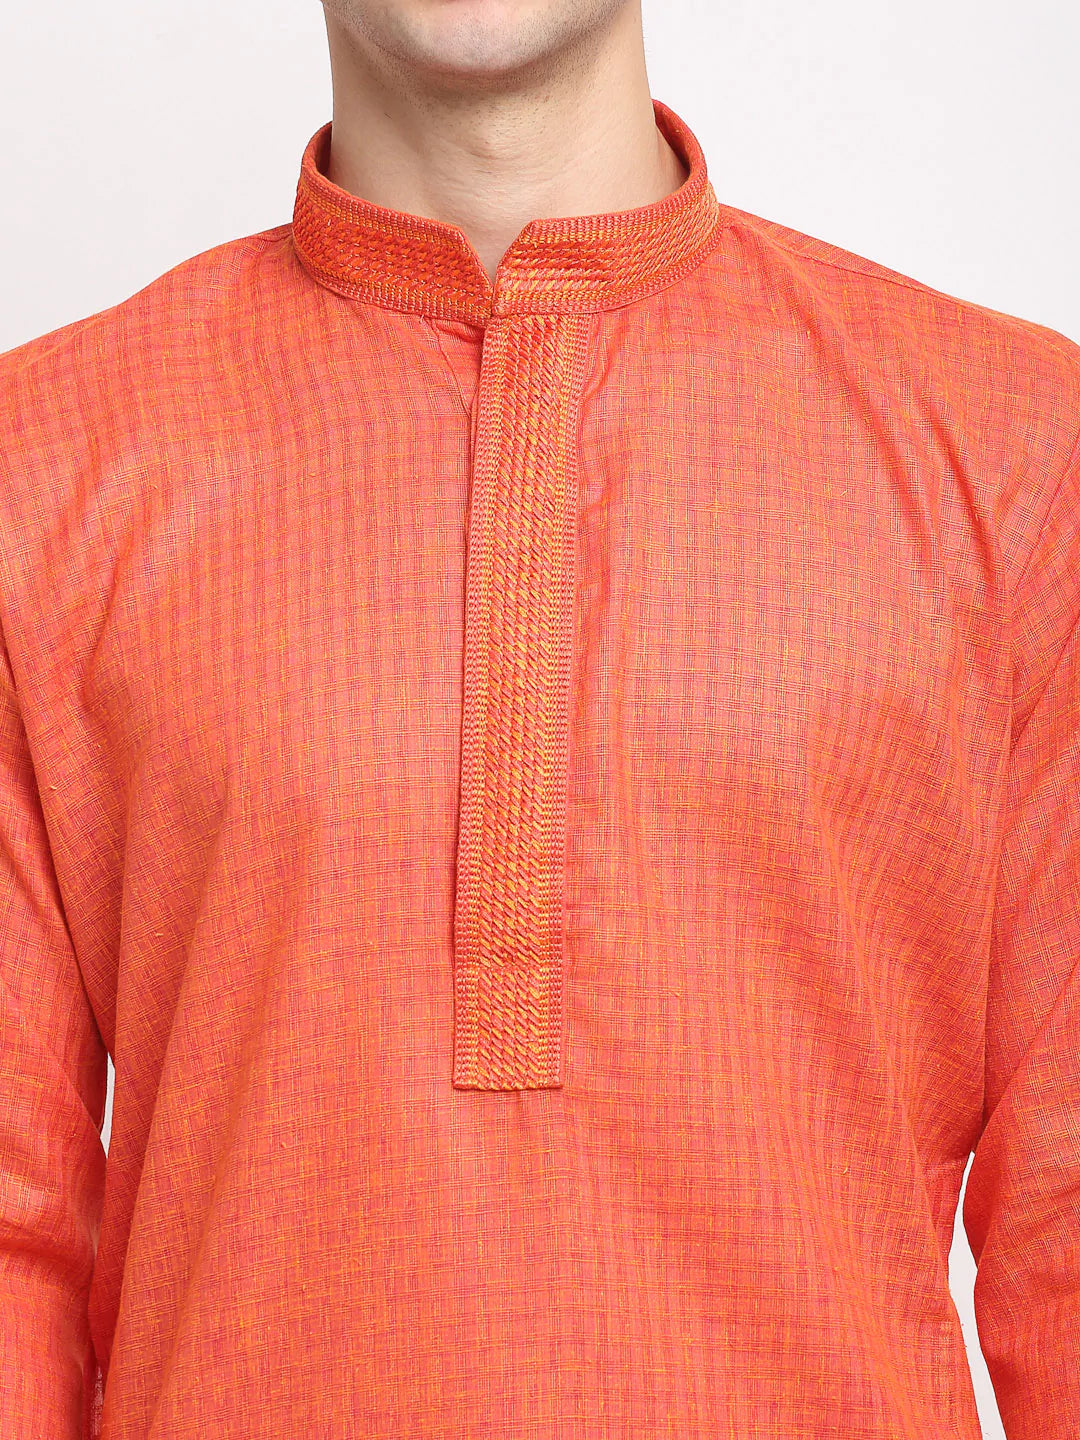 Jompers Men's D-Orange Woven Kurta Payjama Sets ( JOKP 617 D-Orange )